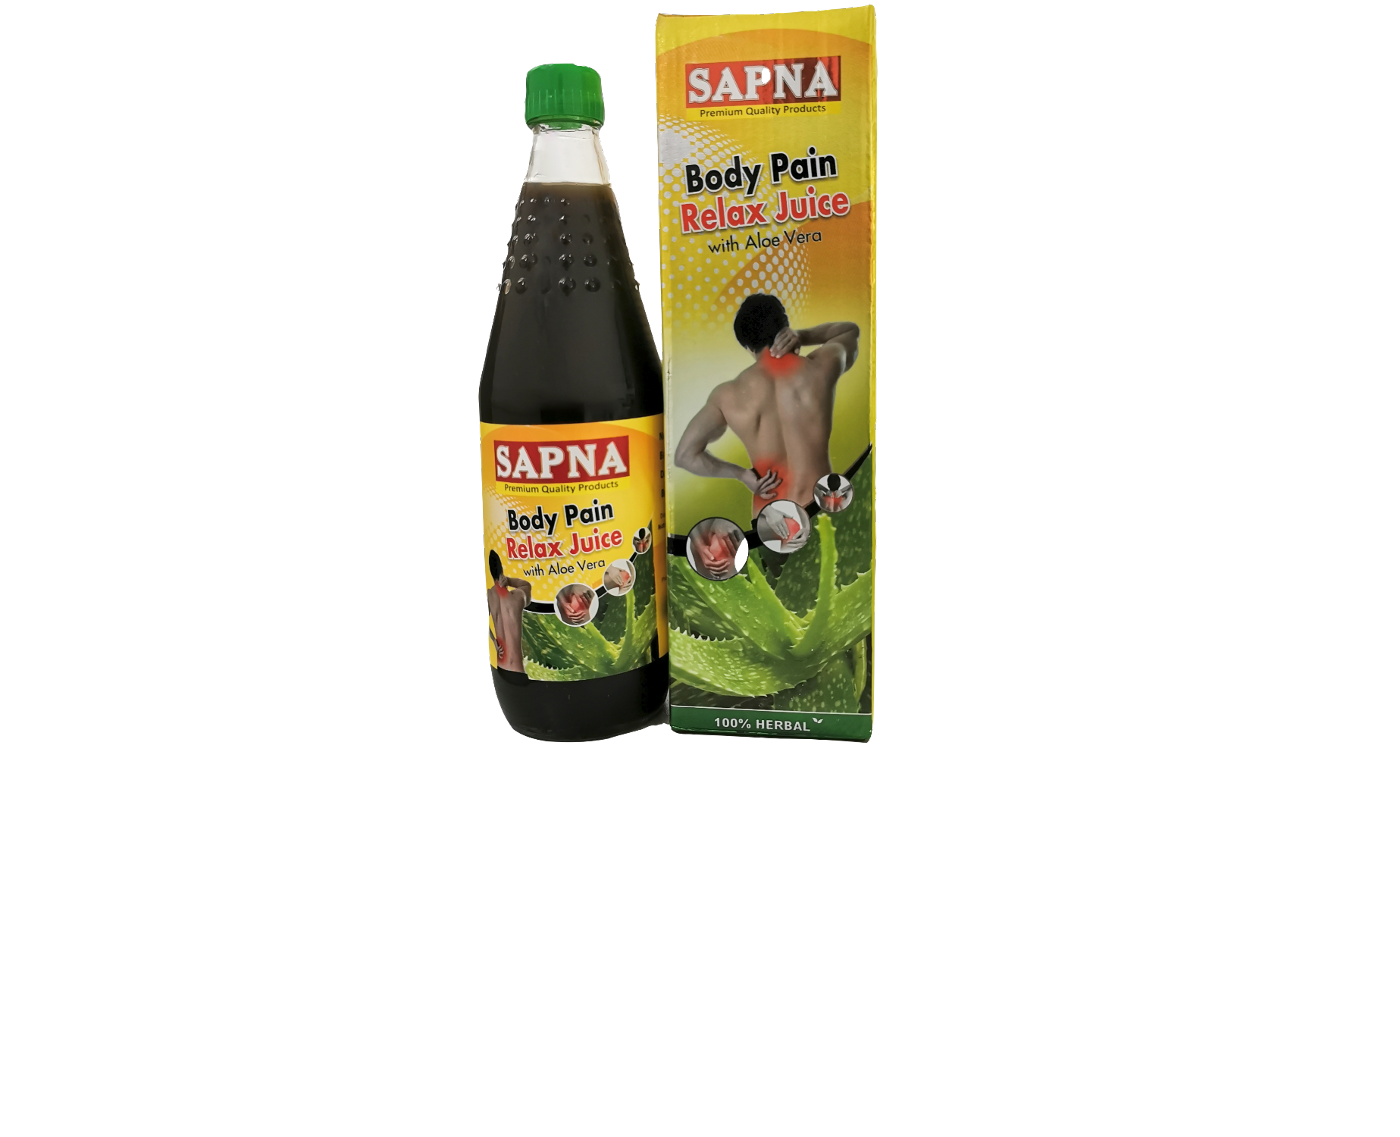 Sapna Body Pain Relax Juice with Aloe Vera (100% Herbal)